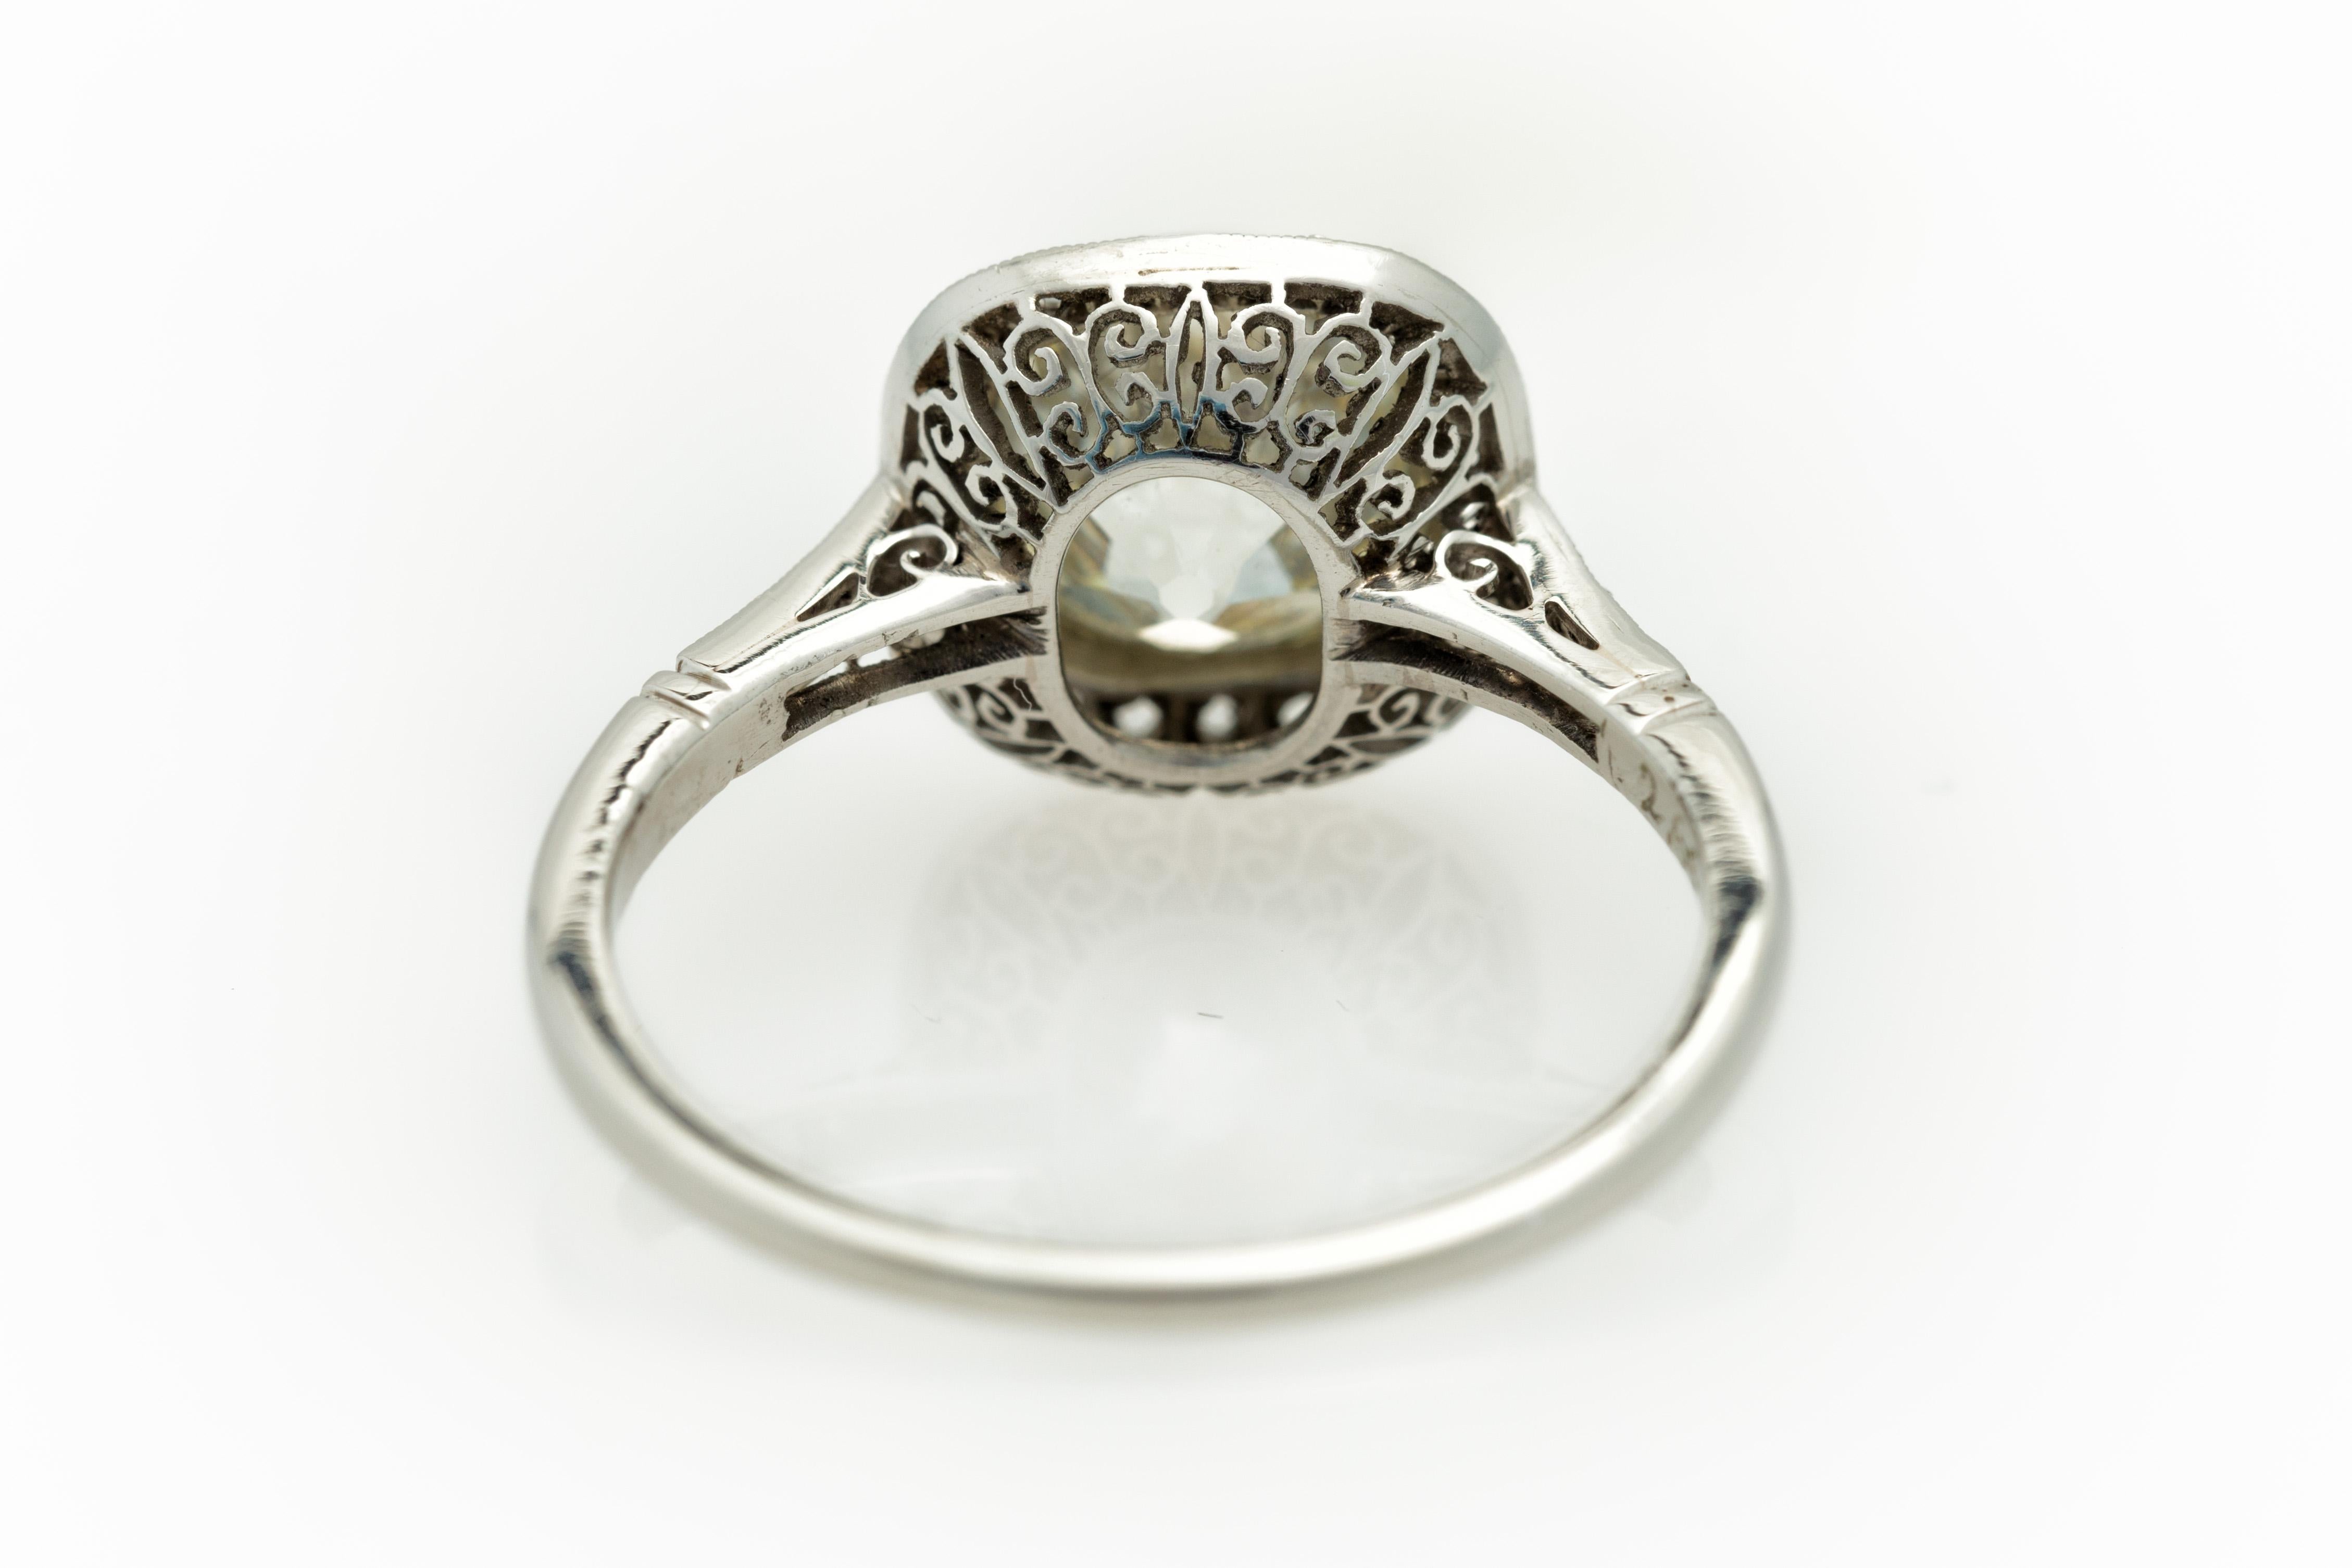 Italian 1950s Art Deco Revival 2.64 Carat Cushion Cut Diamond Ring in Platinum 5